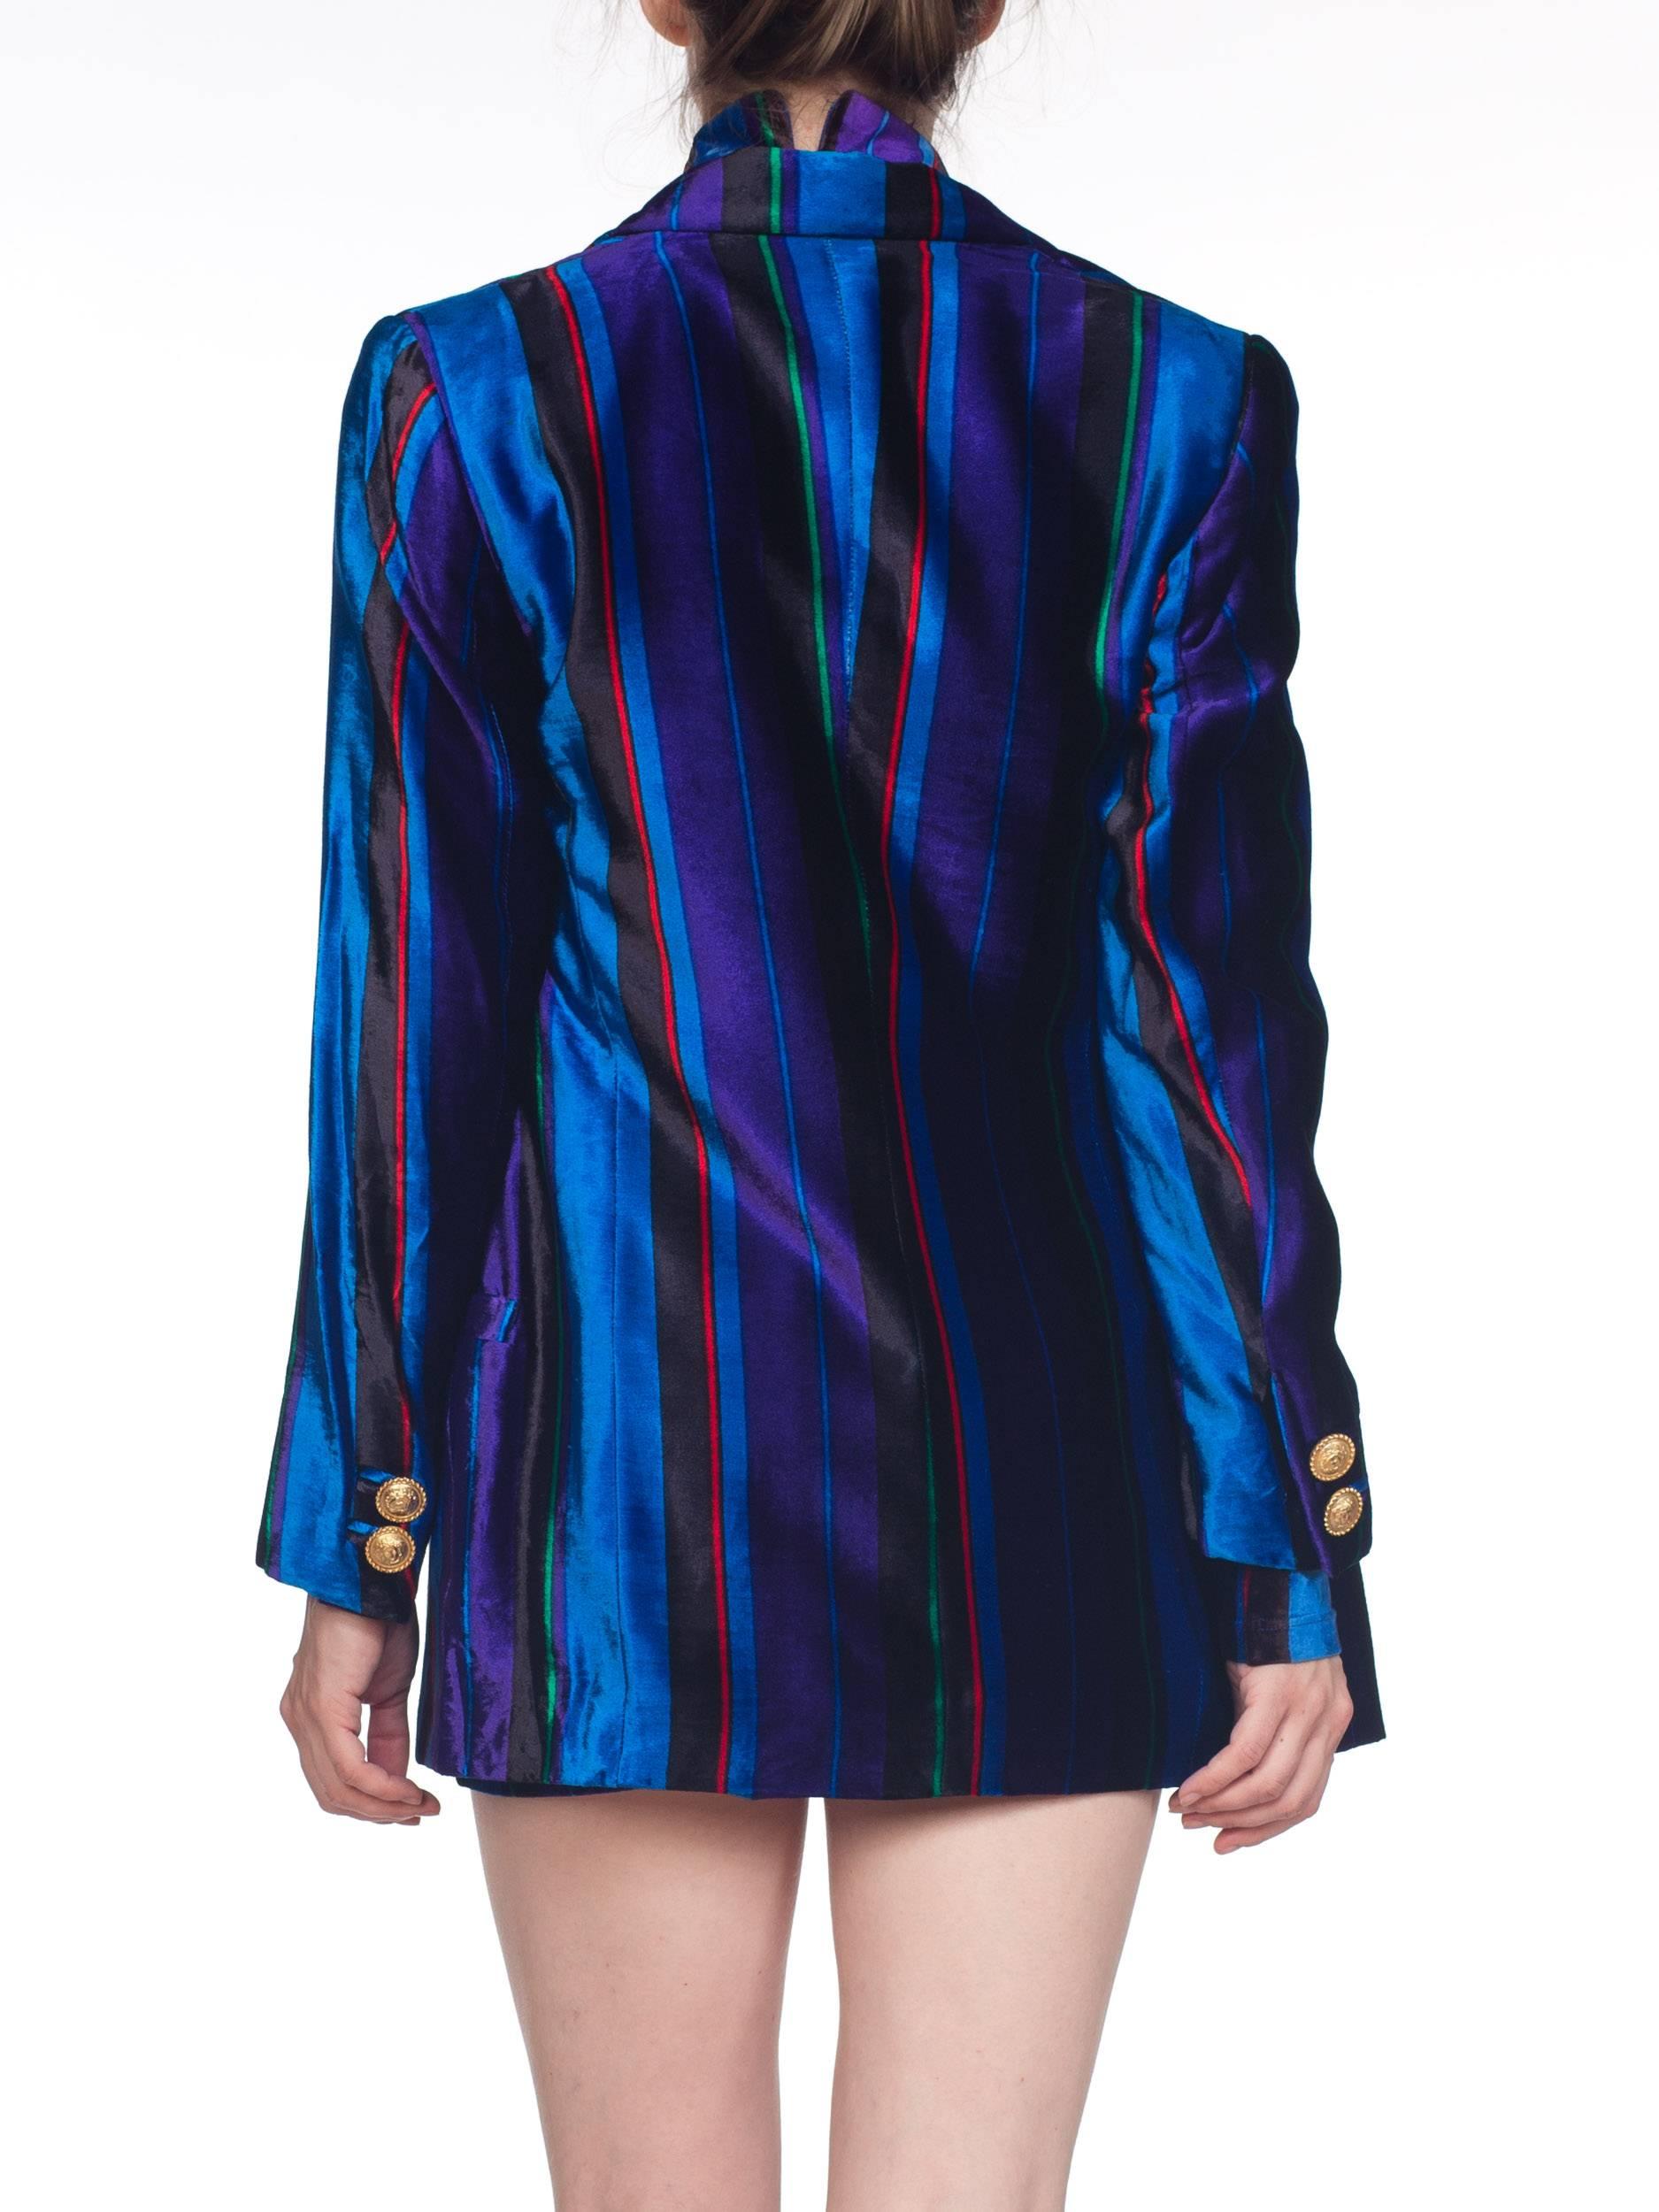 Gianni Versace Striped Stretch Velvet Dress, 1990s  10